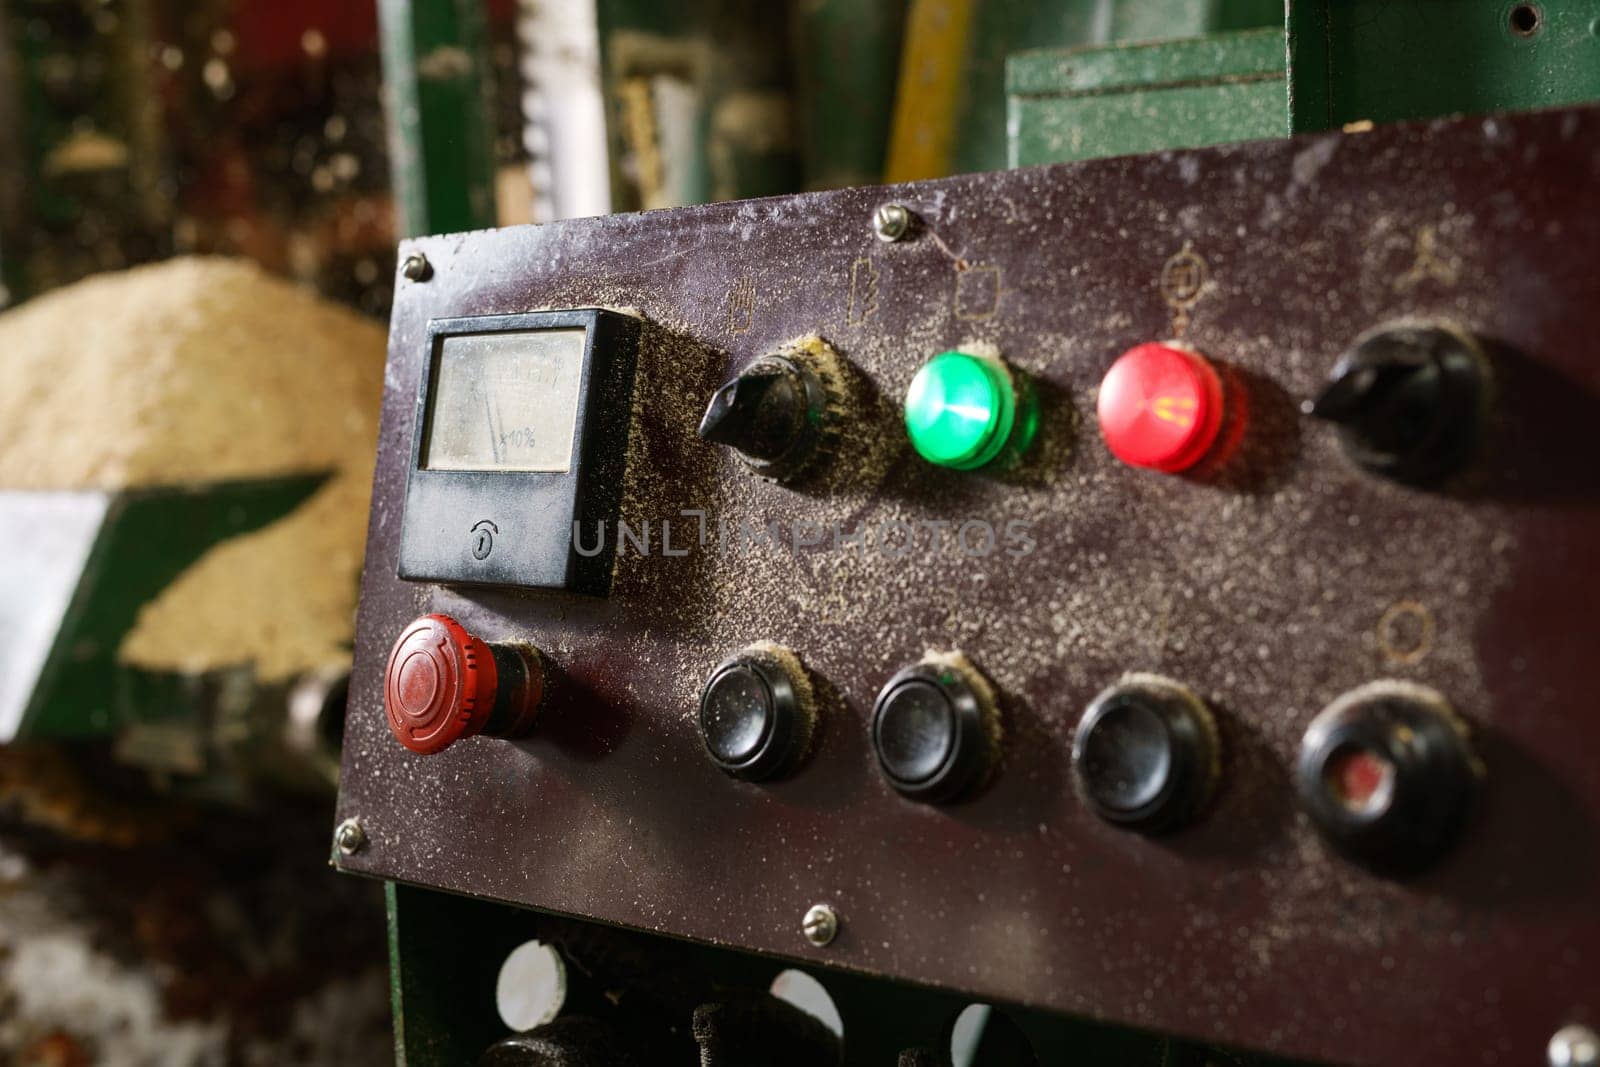 At sawmill. Control panel with luminous indicators, close-up